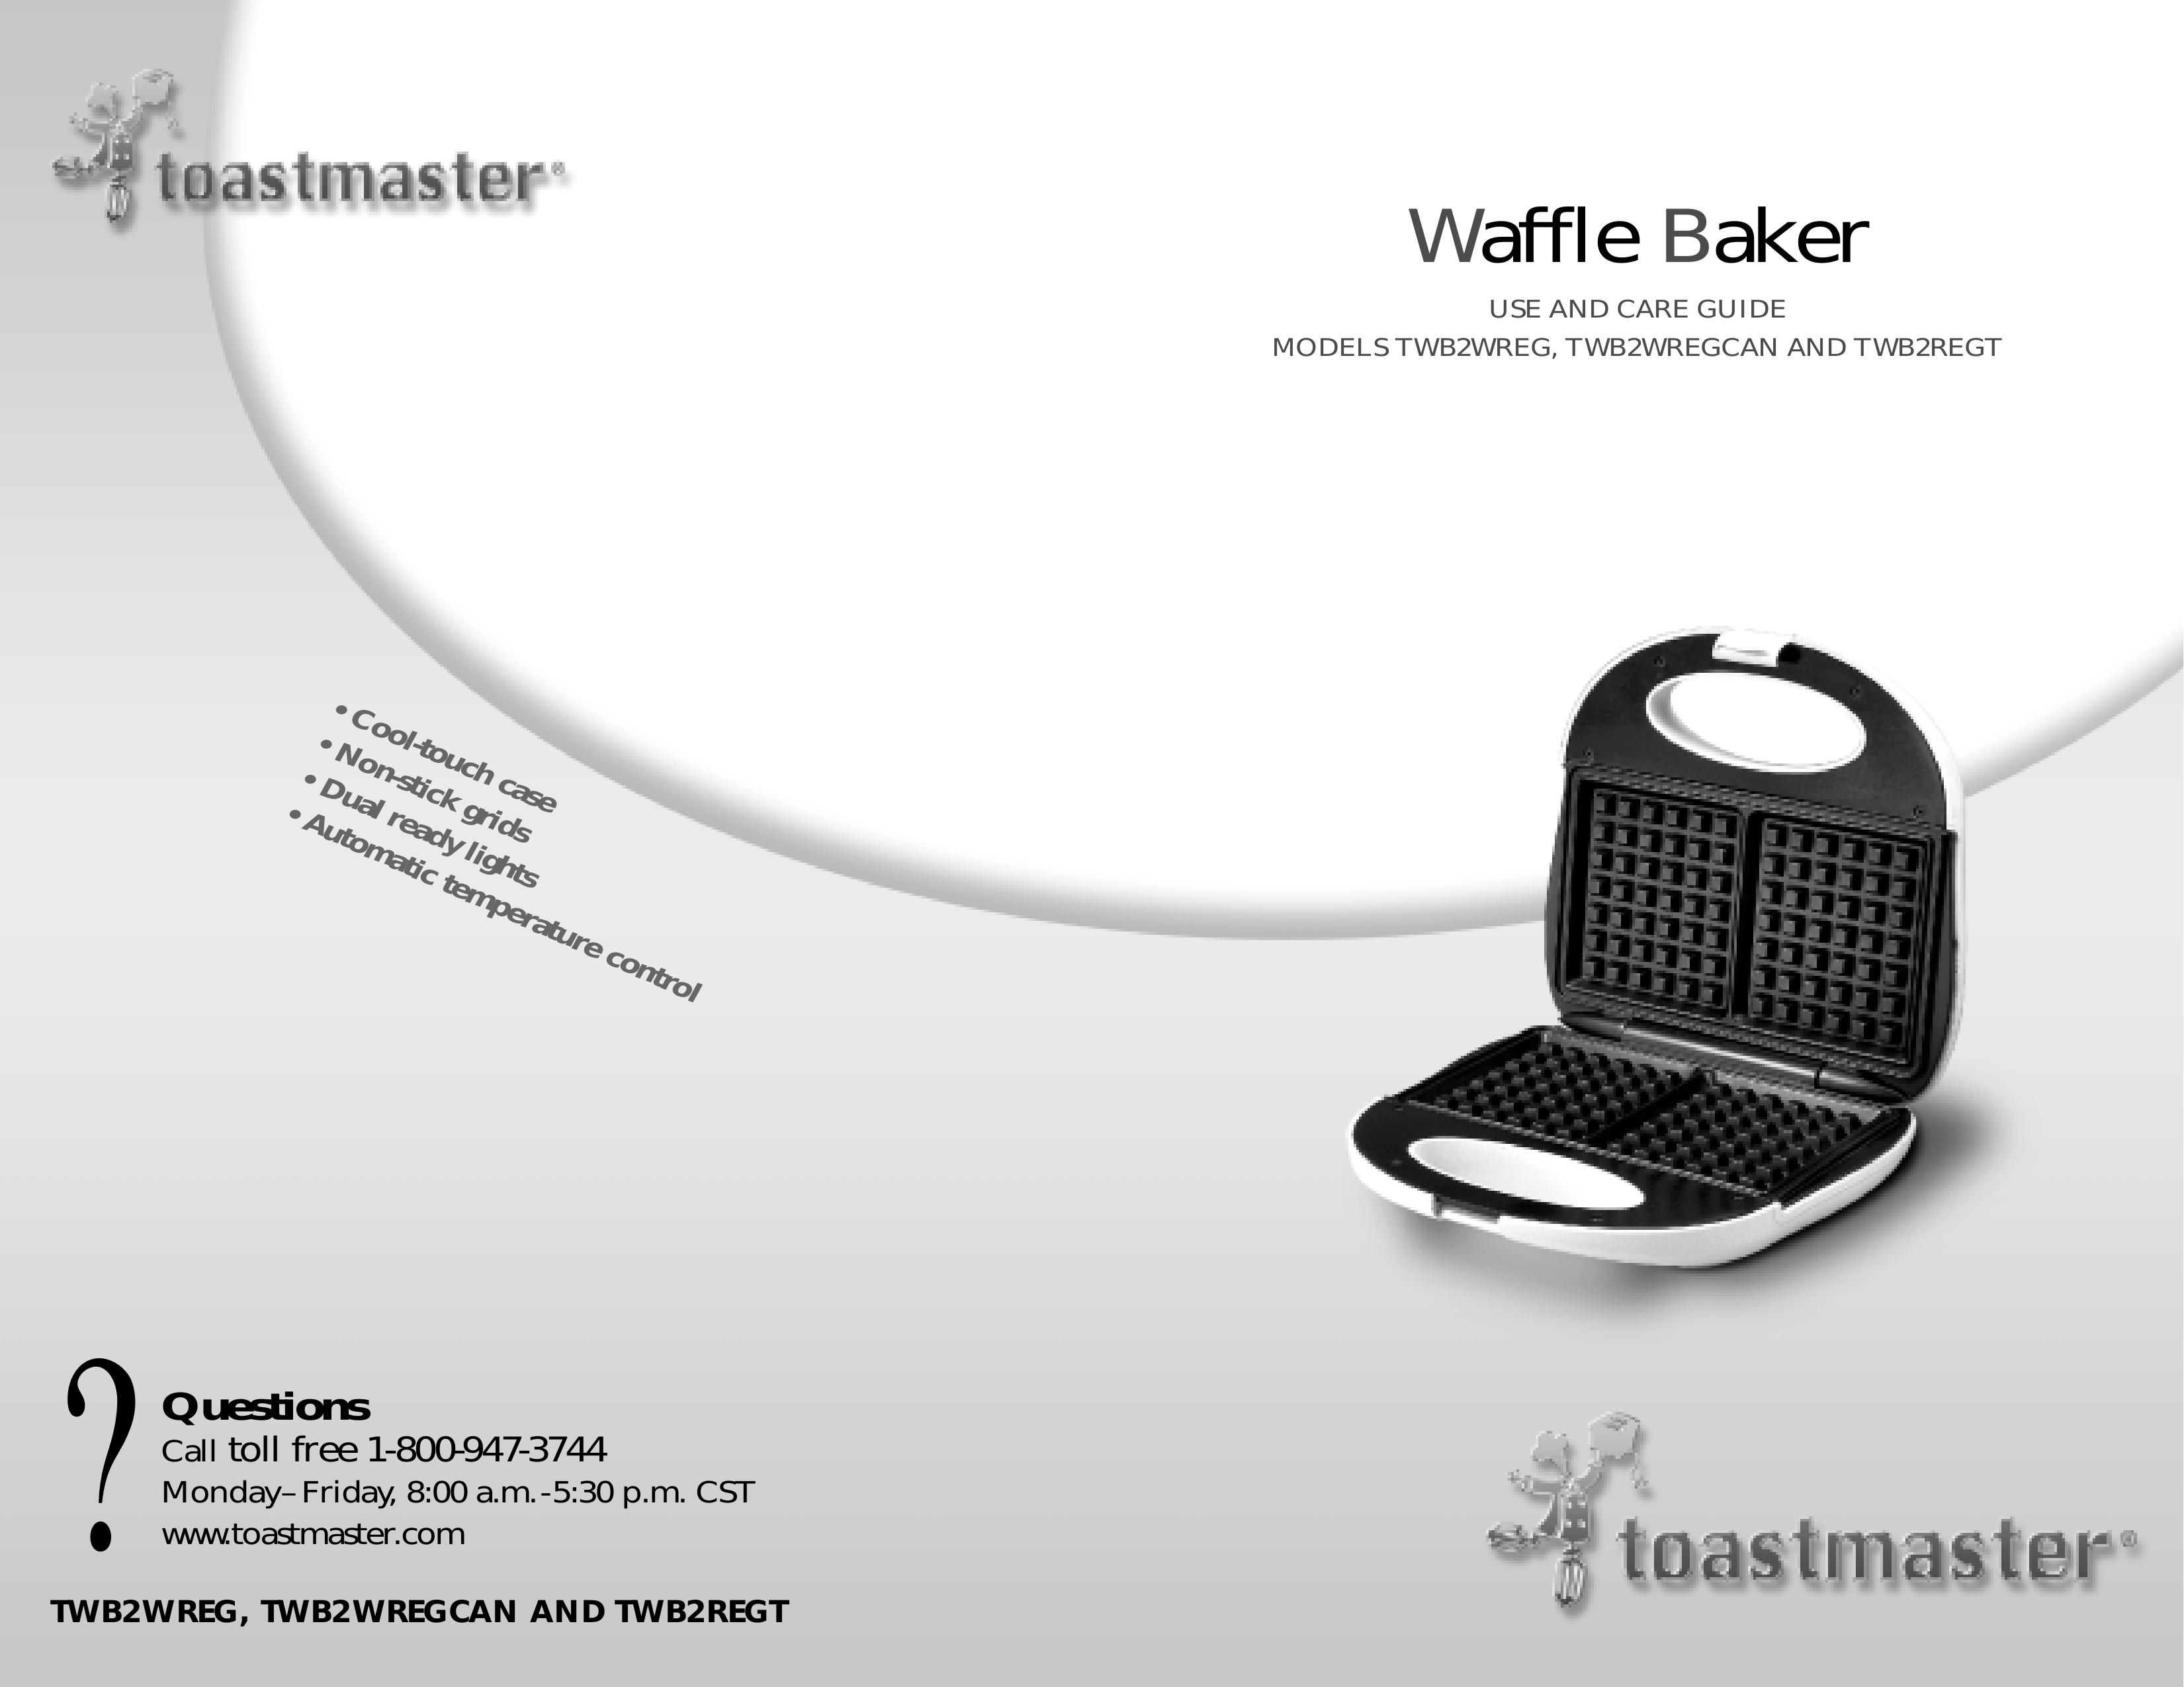 Toastmaster TWB2WREGCAN, TWB2REGT Waffle Iron User Manual